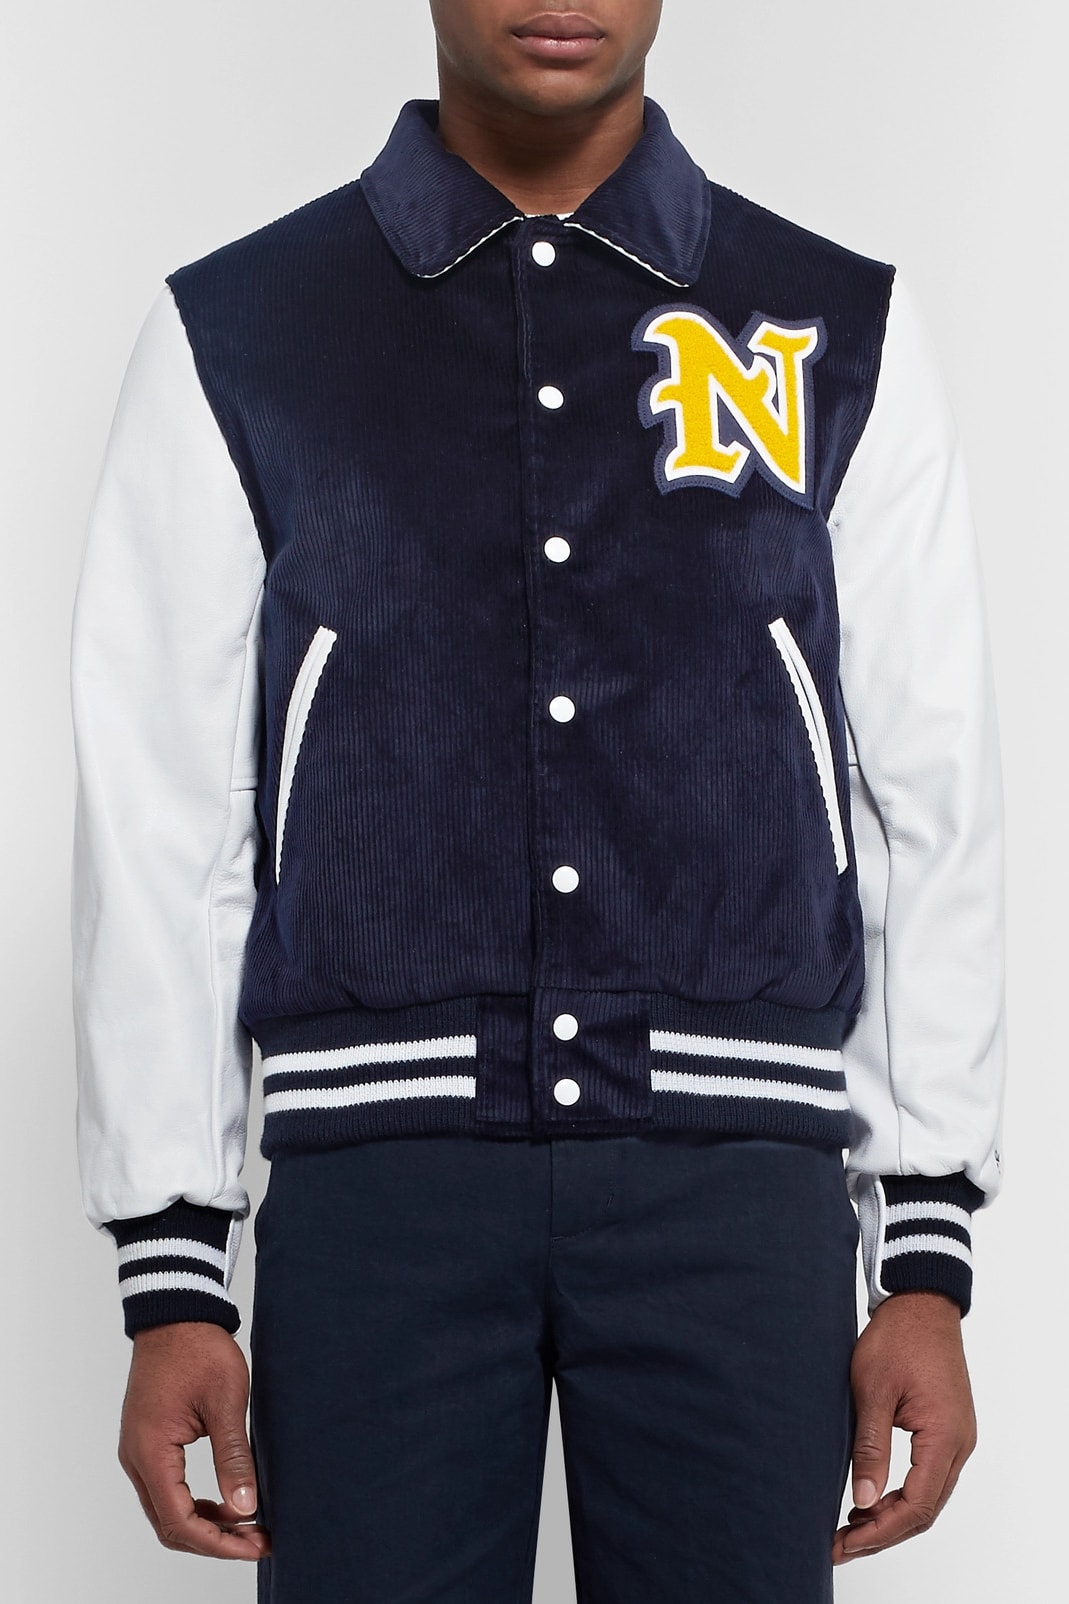 Noah Golden Bear Varsity Jacket Outerwear Clothing Fashion Apparel